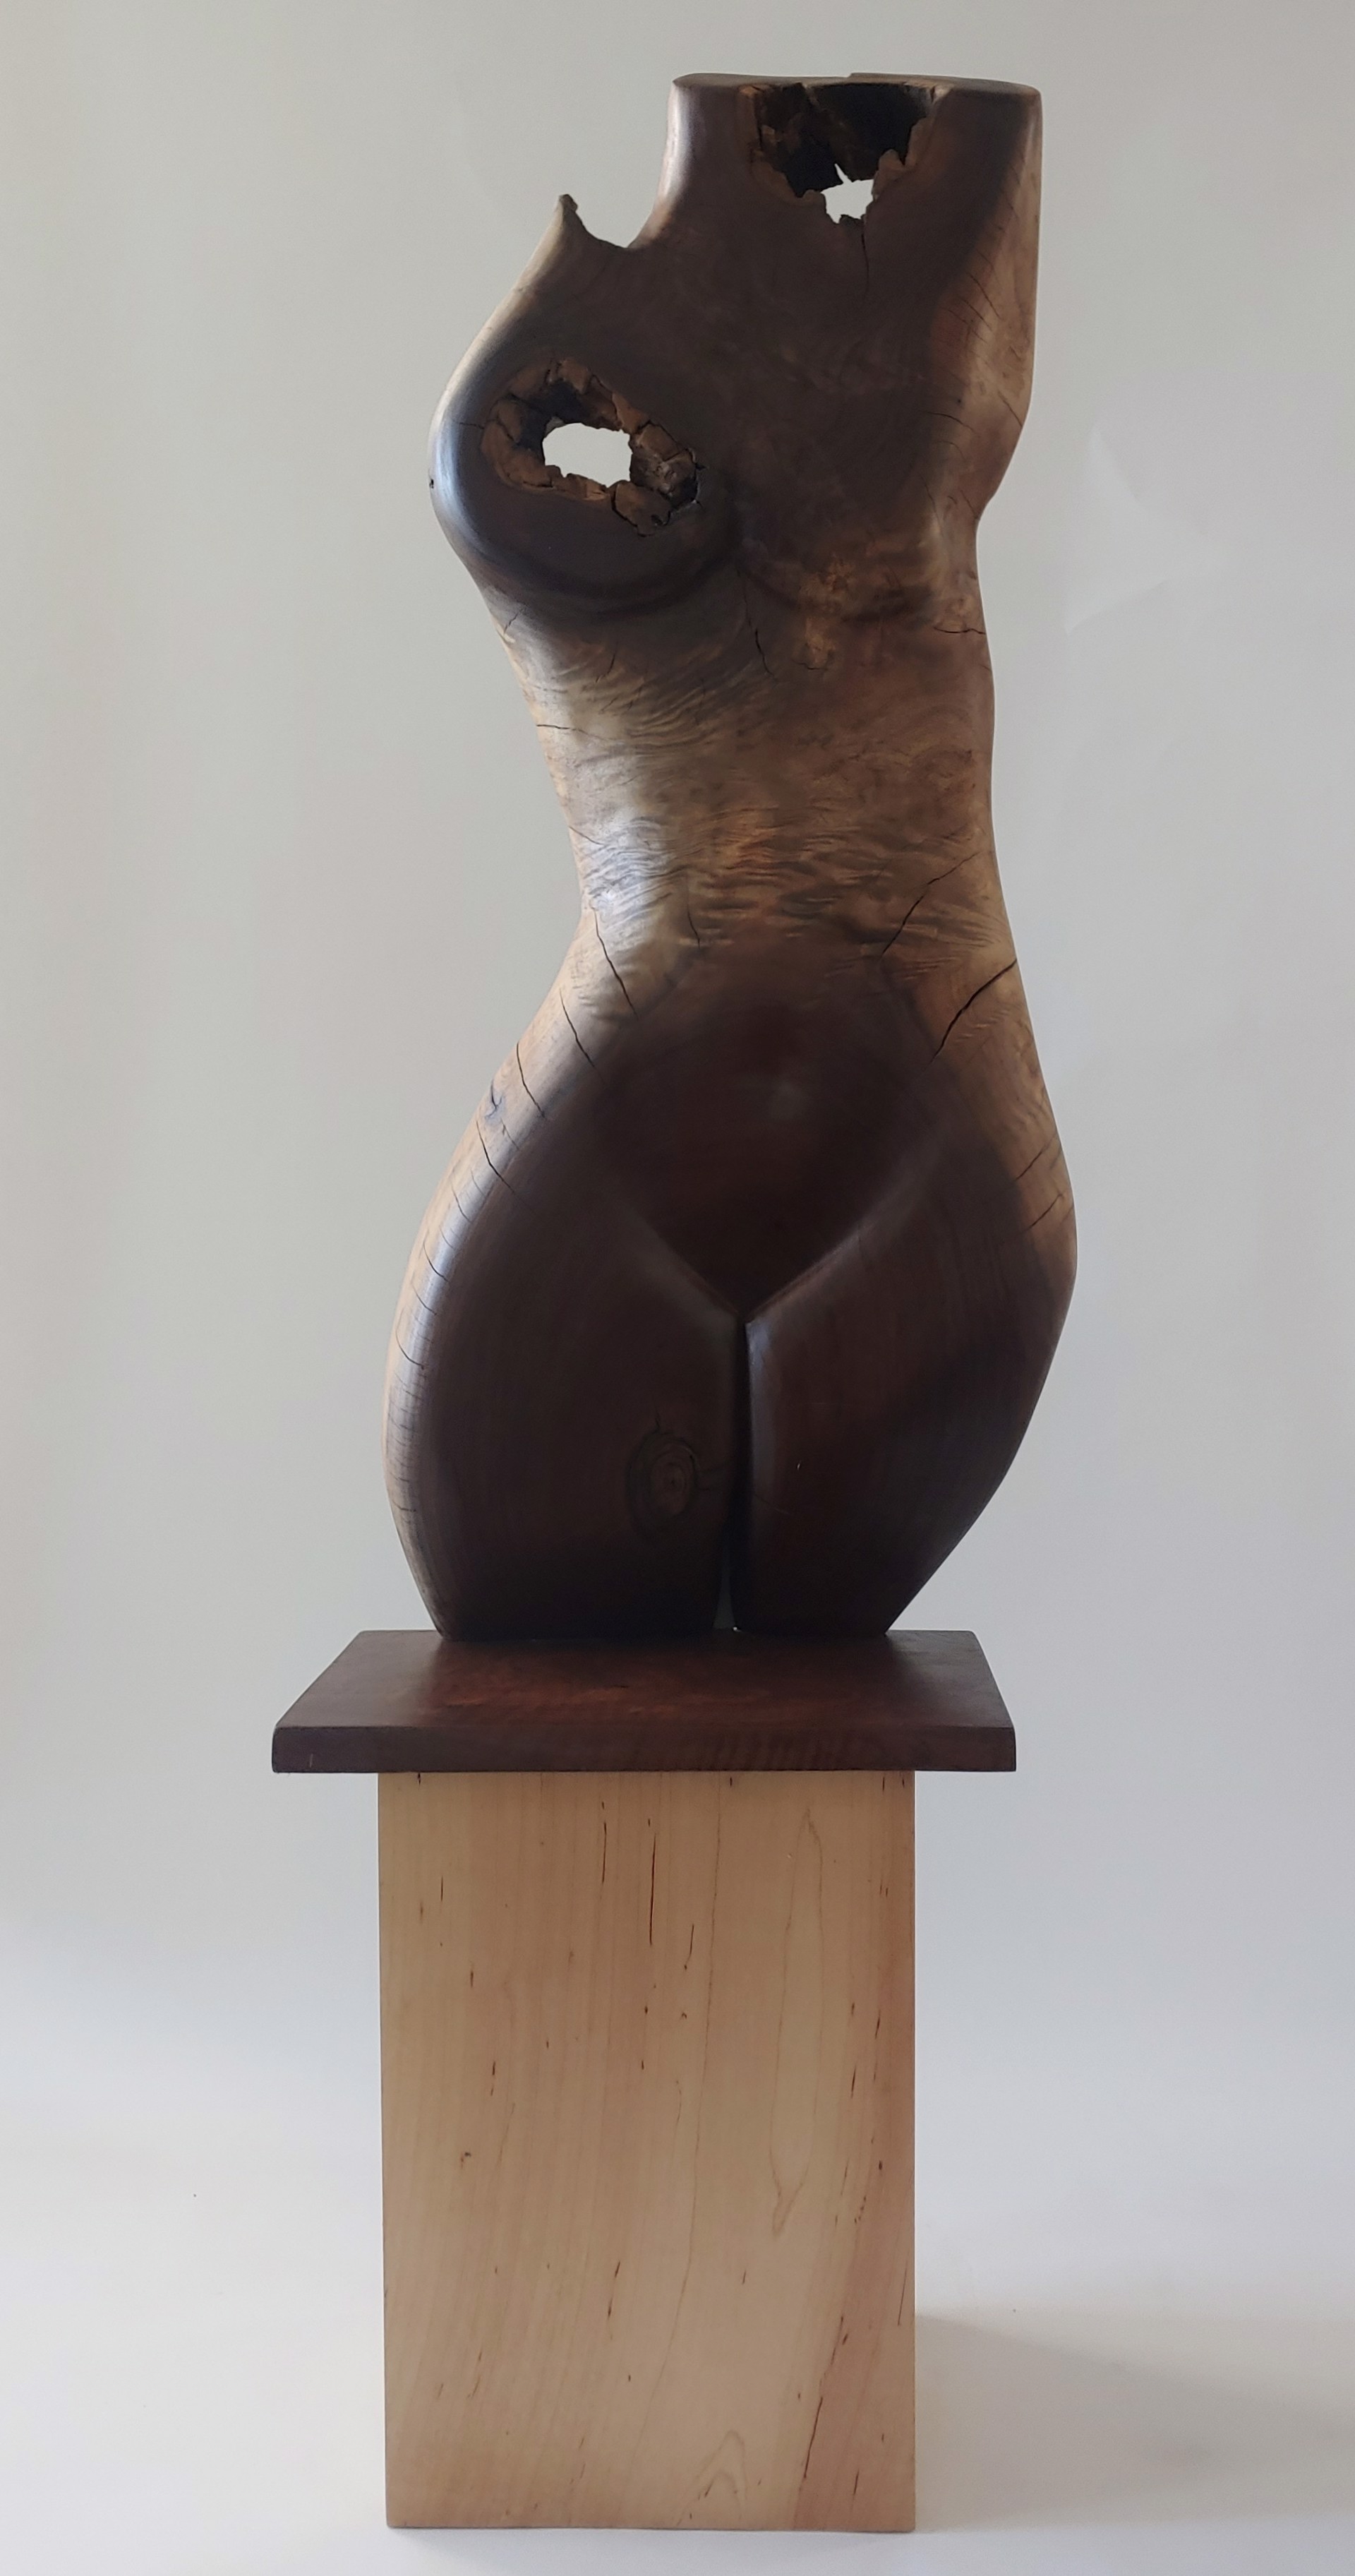 Torso #1 - Wood Sculpture by David Amdur